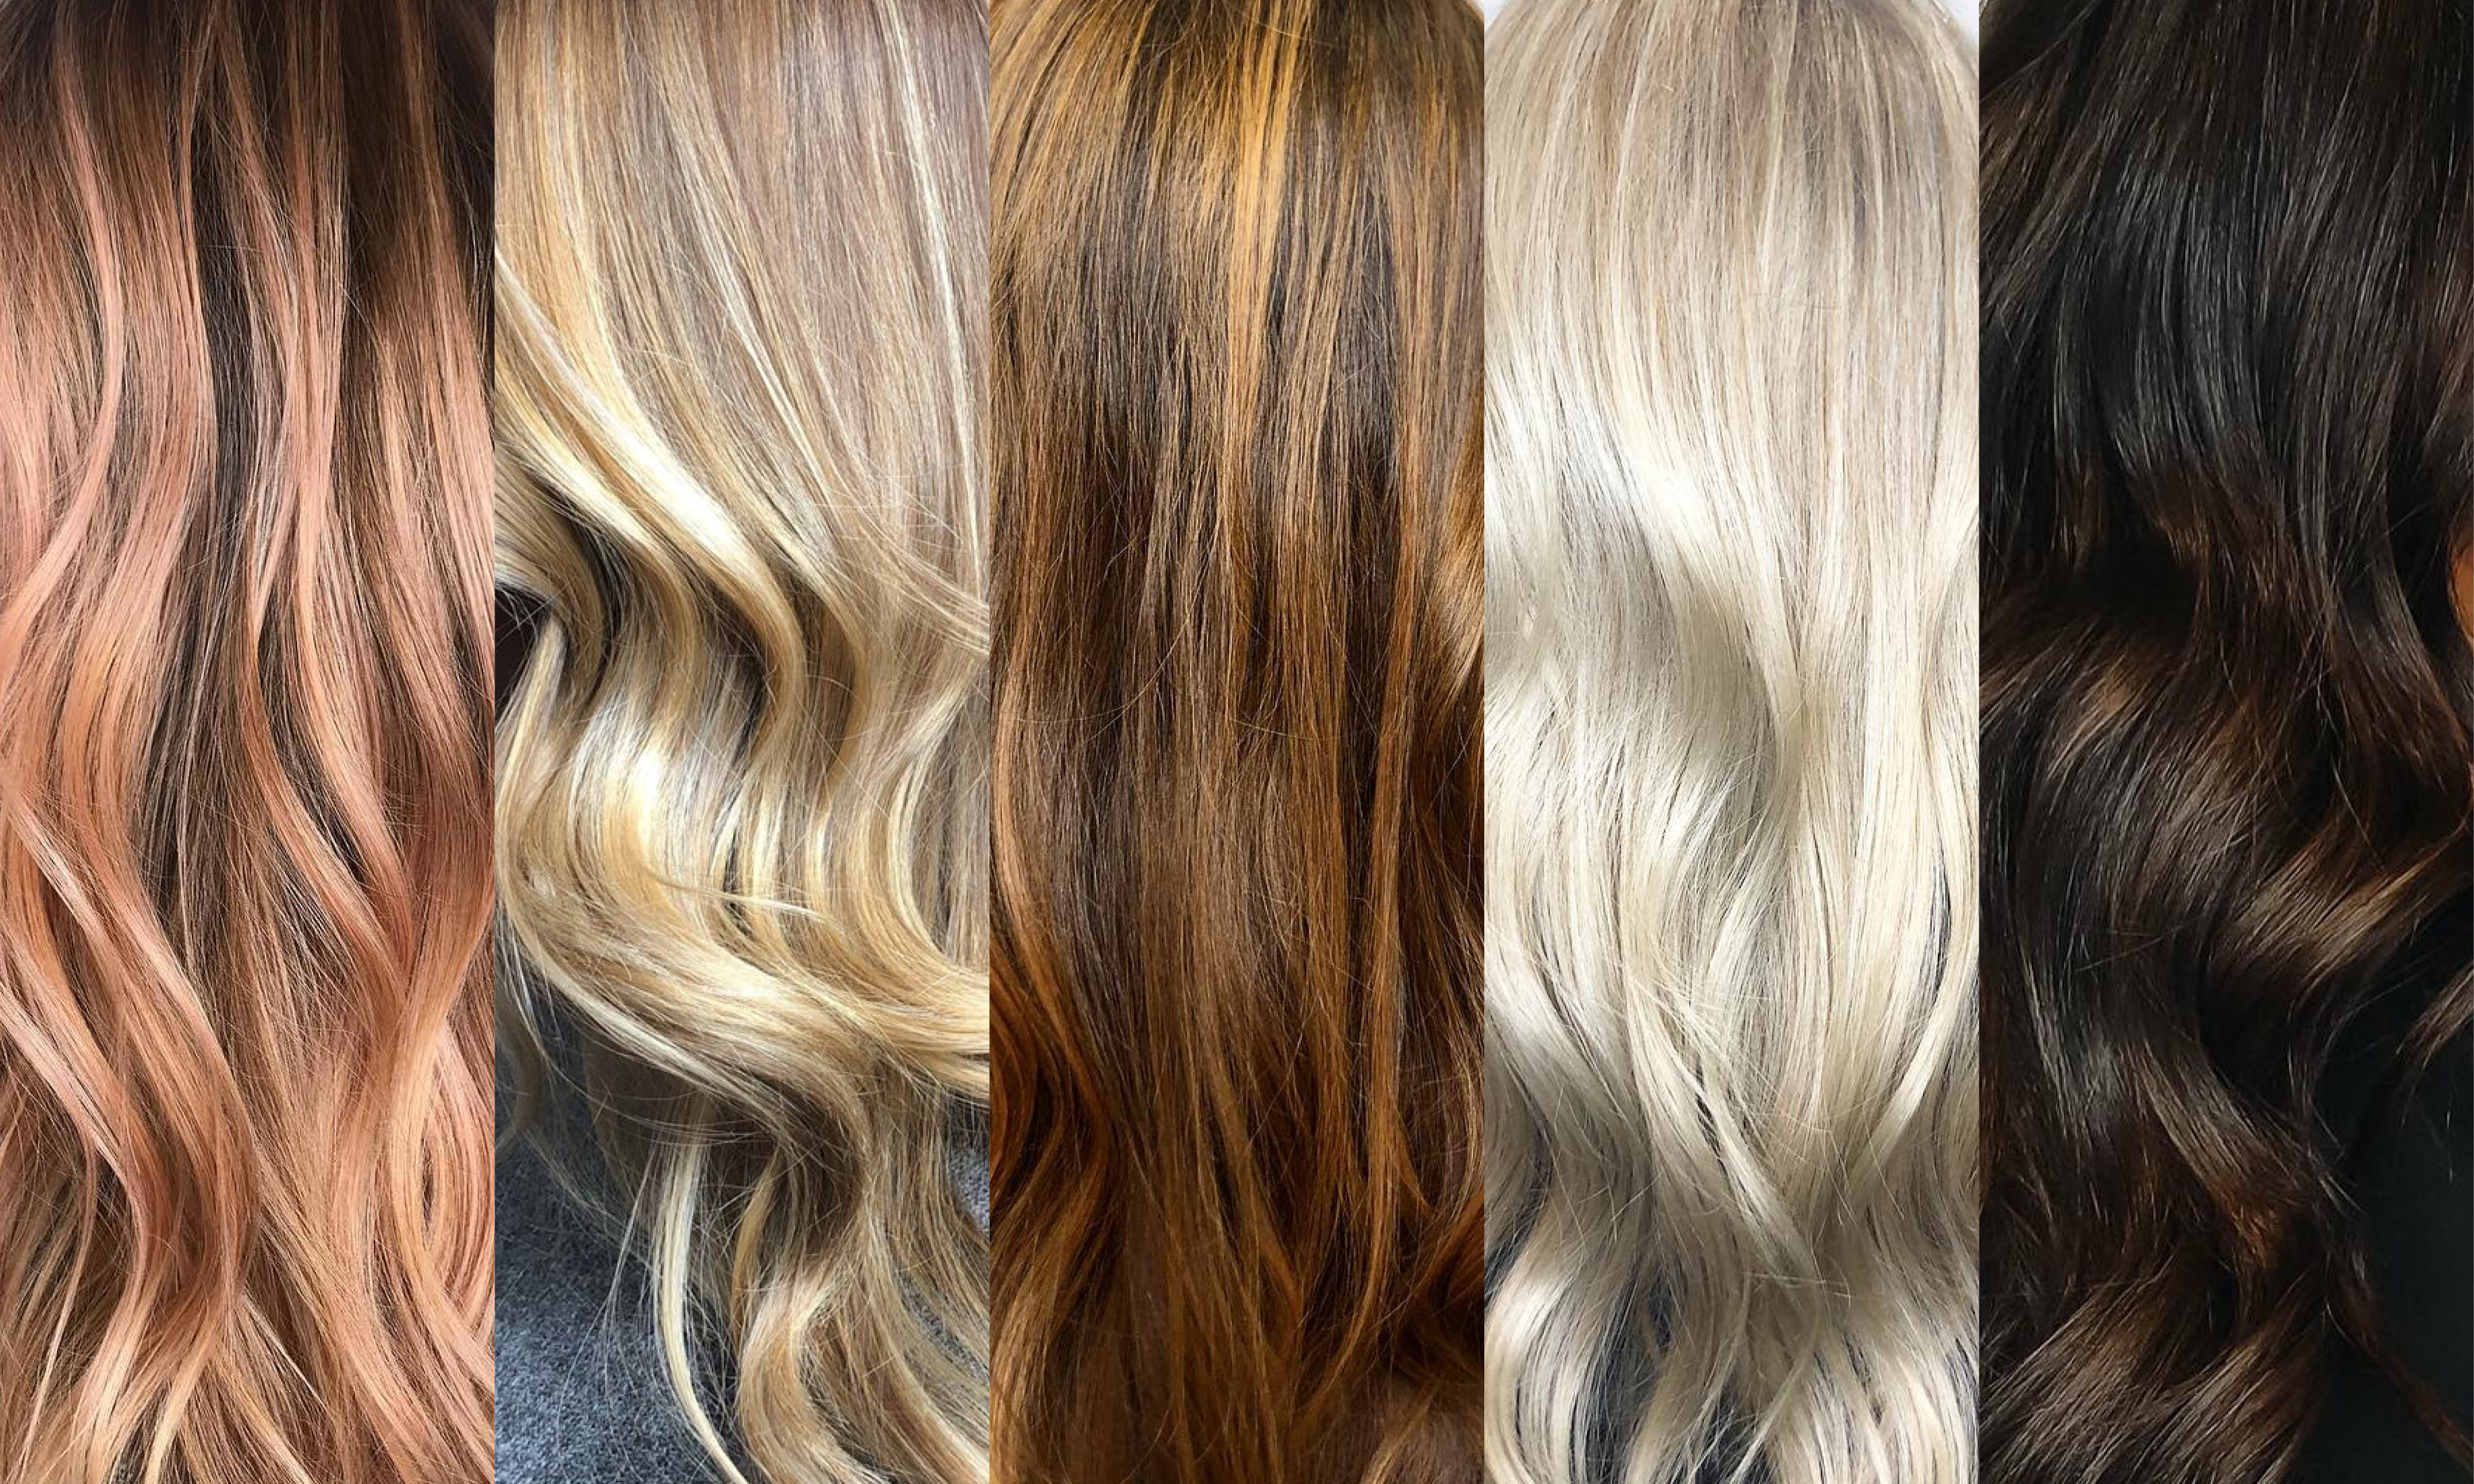 1. "Savannah Blonde" hair color at the salon - wide 4